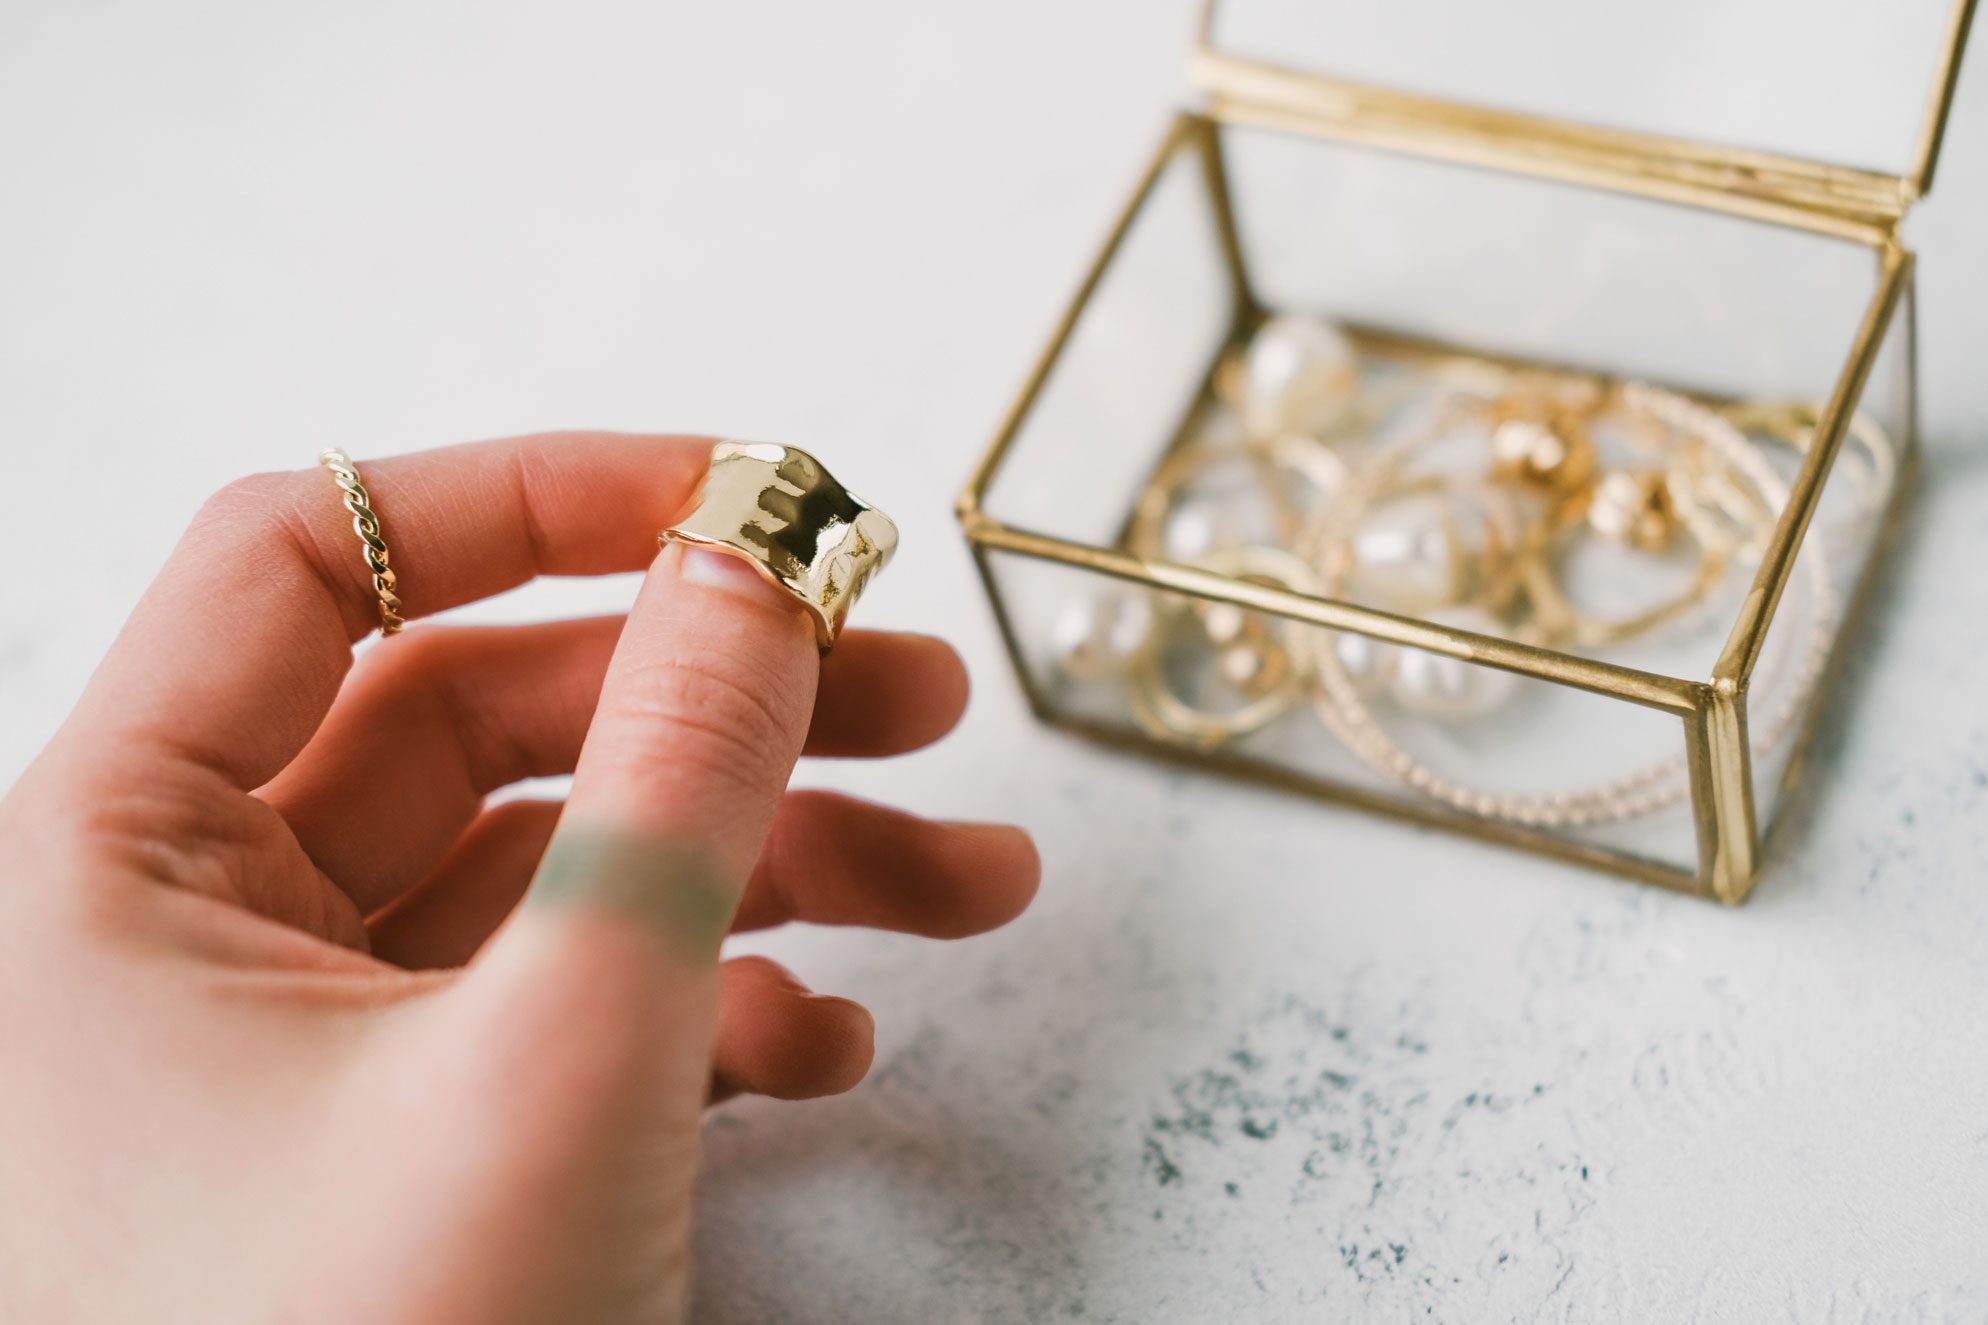 How a nail became a jewellery sensation